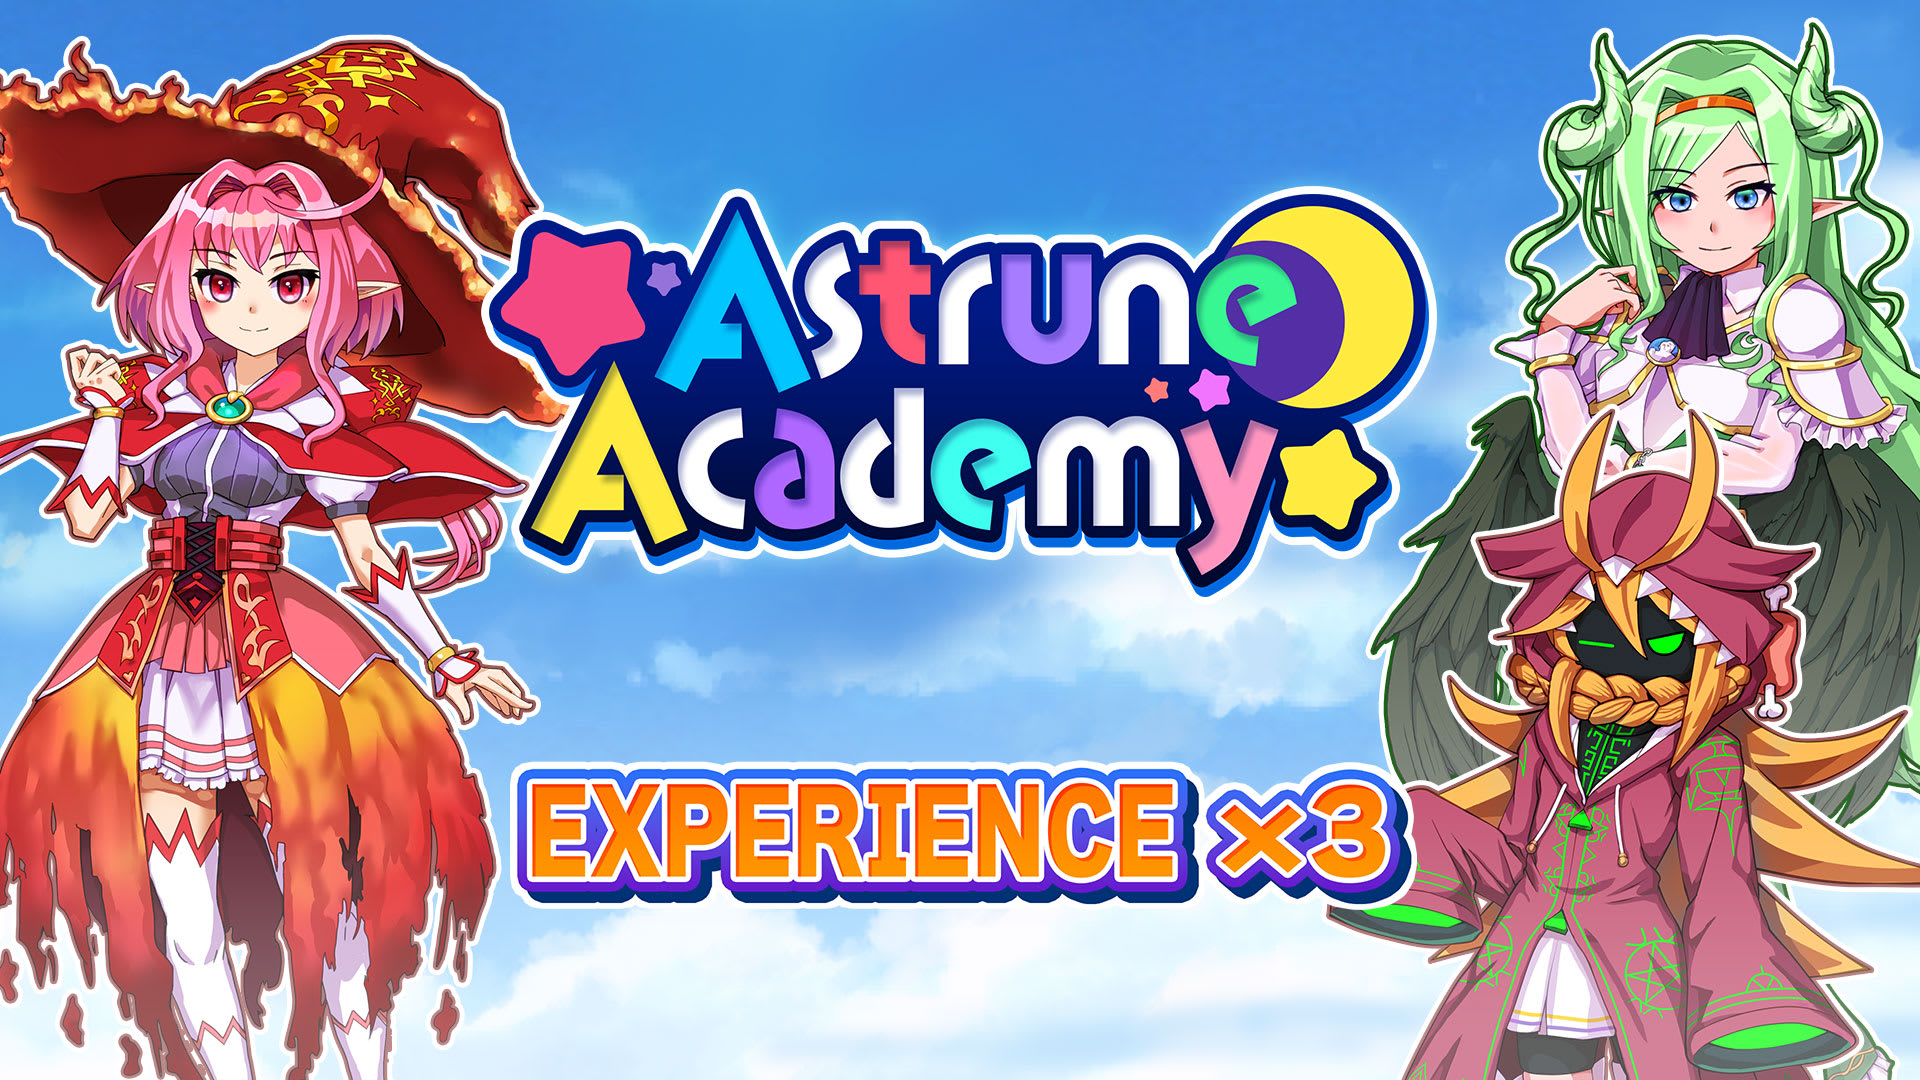 Experience x3 - Astrune Academy